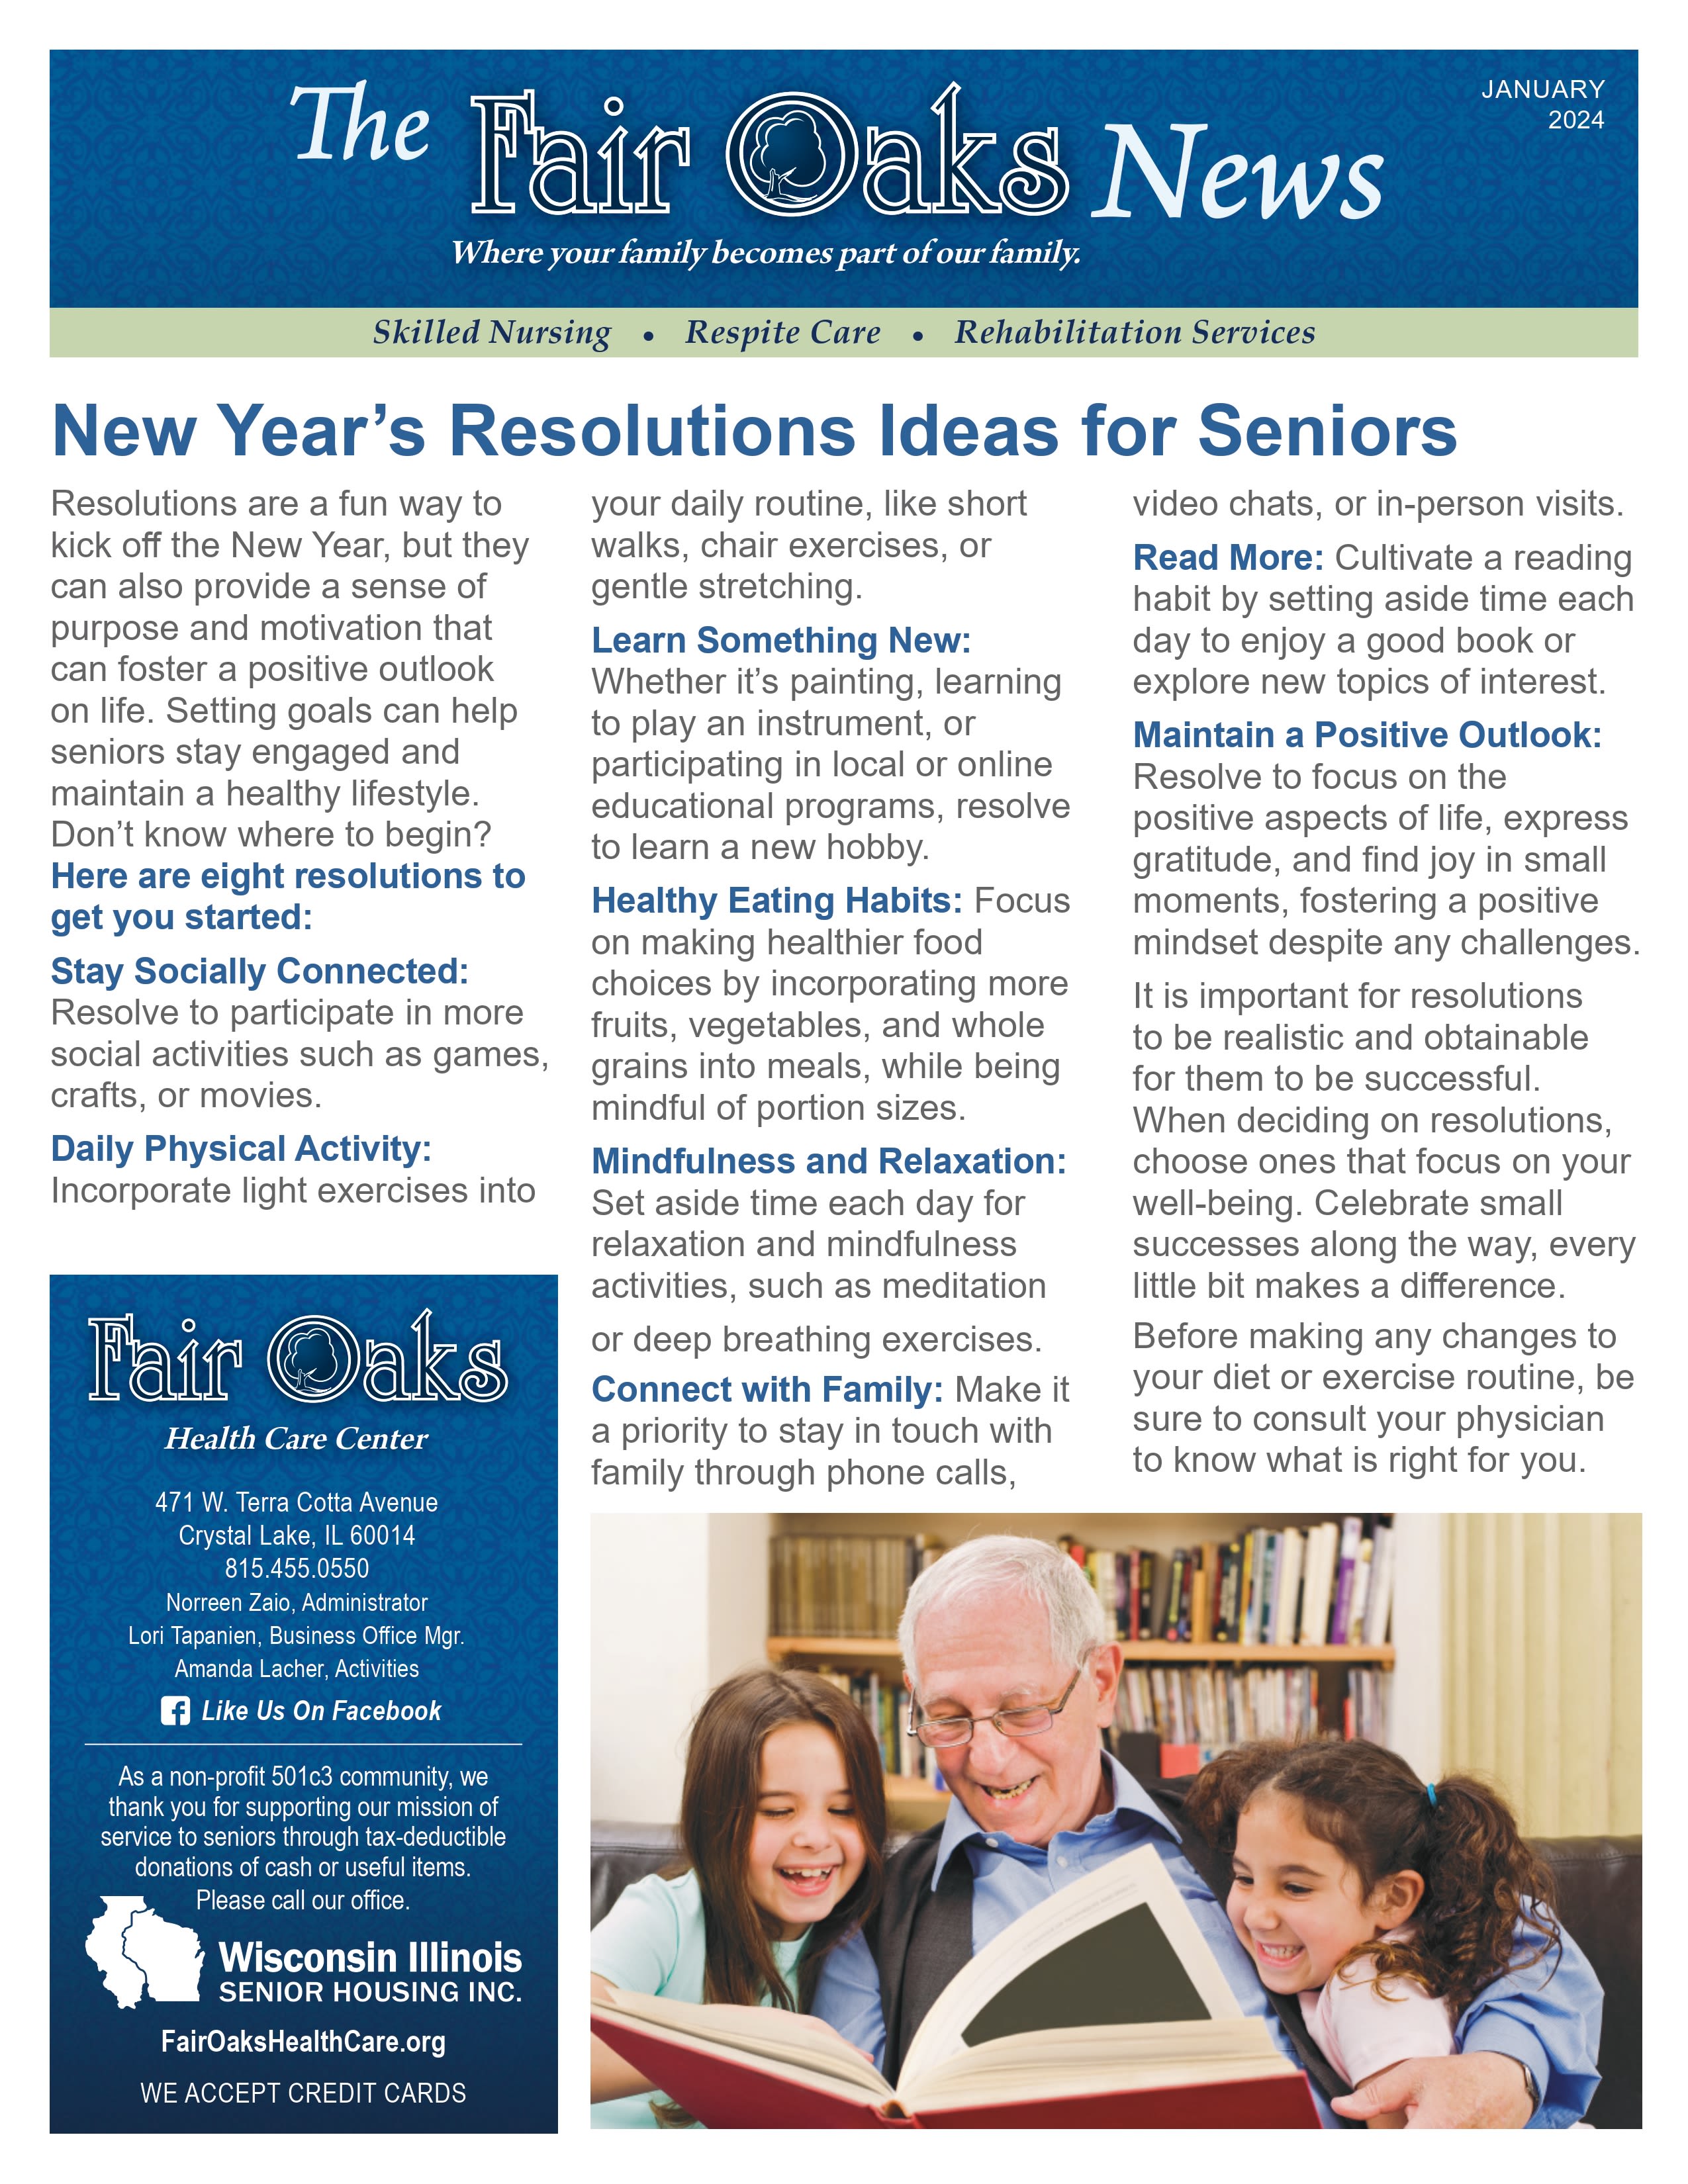 January 2024 Newsletter at Fair Oaks Health Care Center in Crystal Lake, Illinois